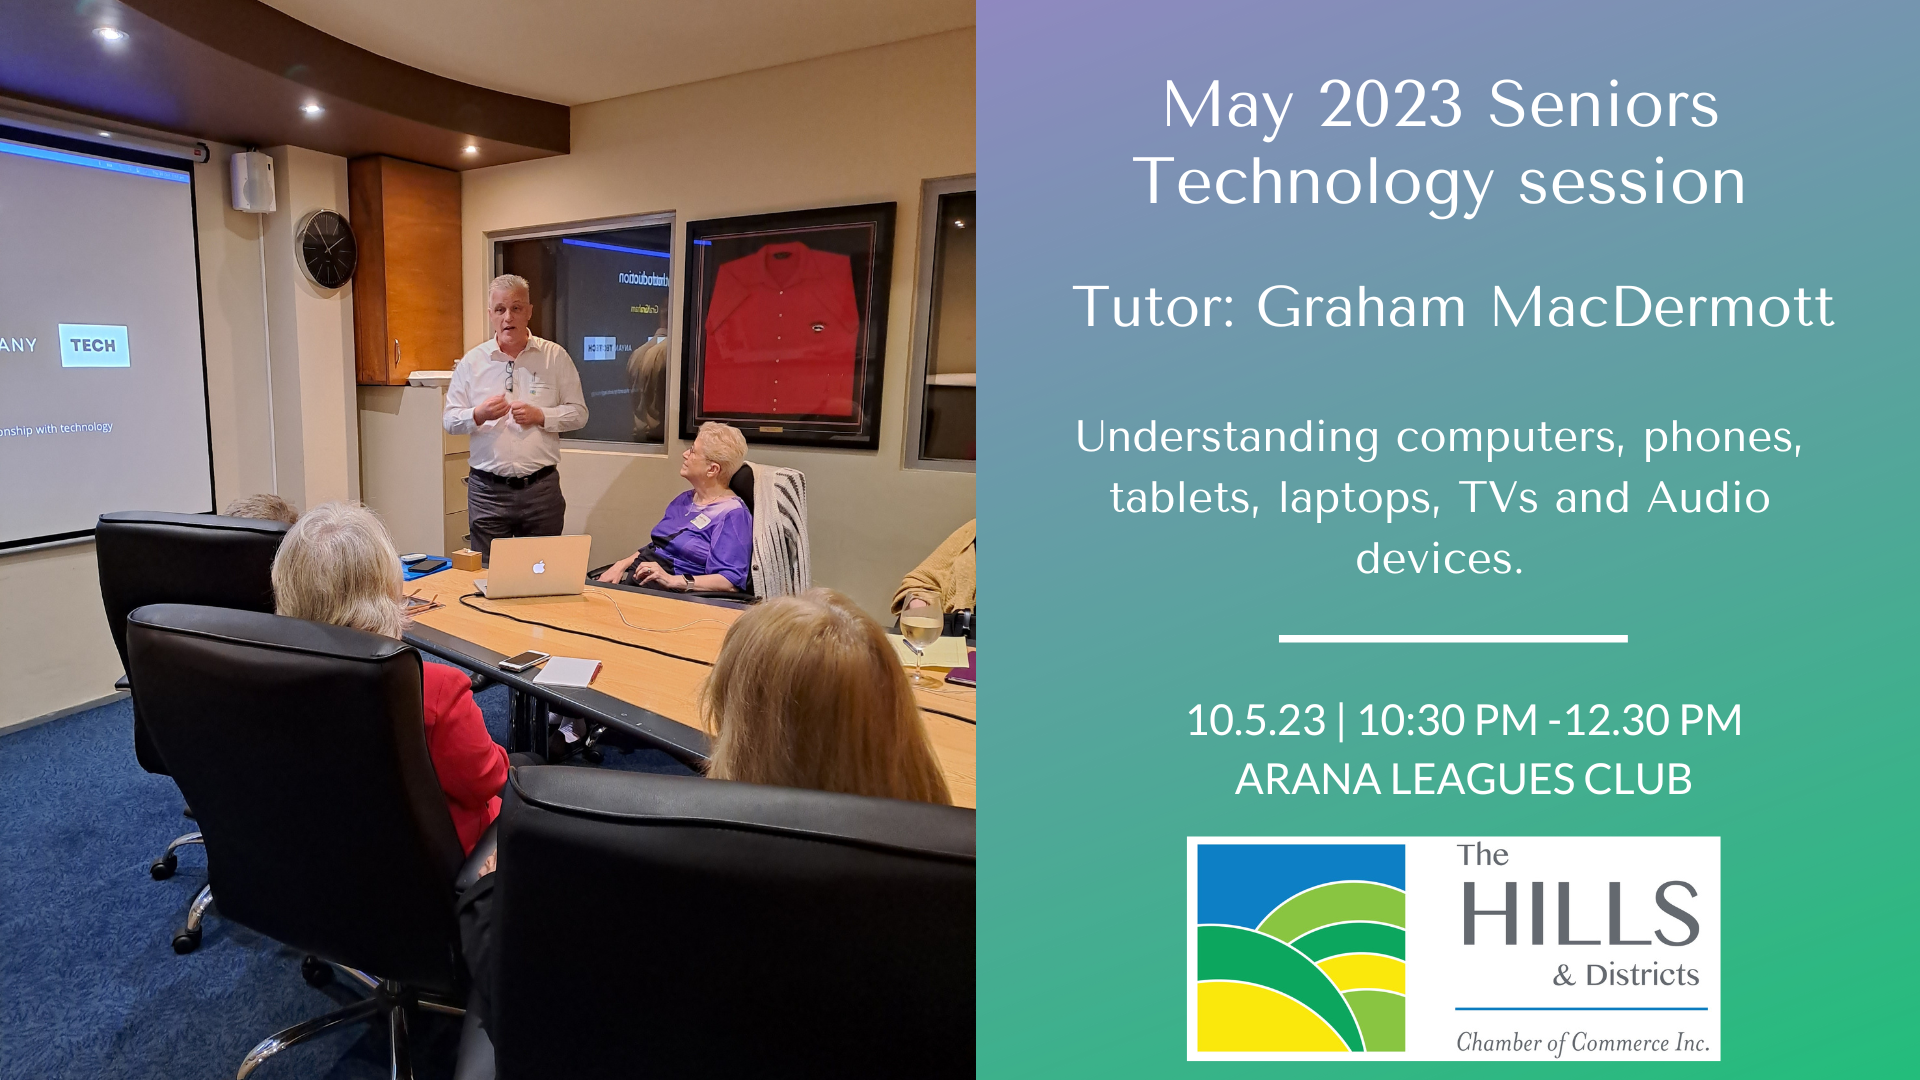 Seniors Event » May 2023 Seniors Technology Session